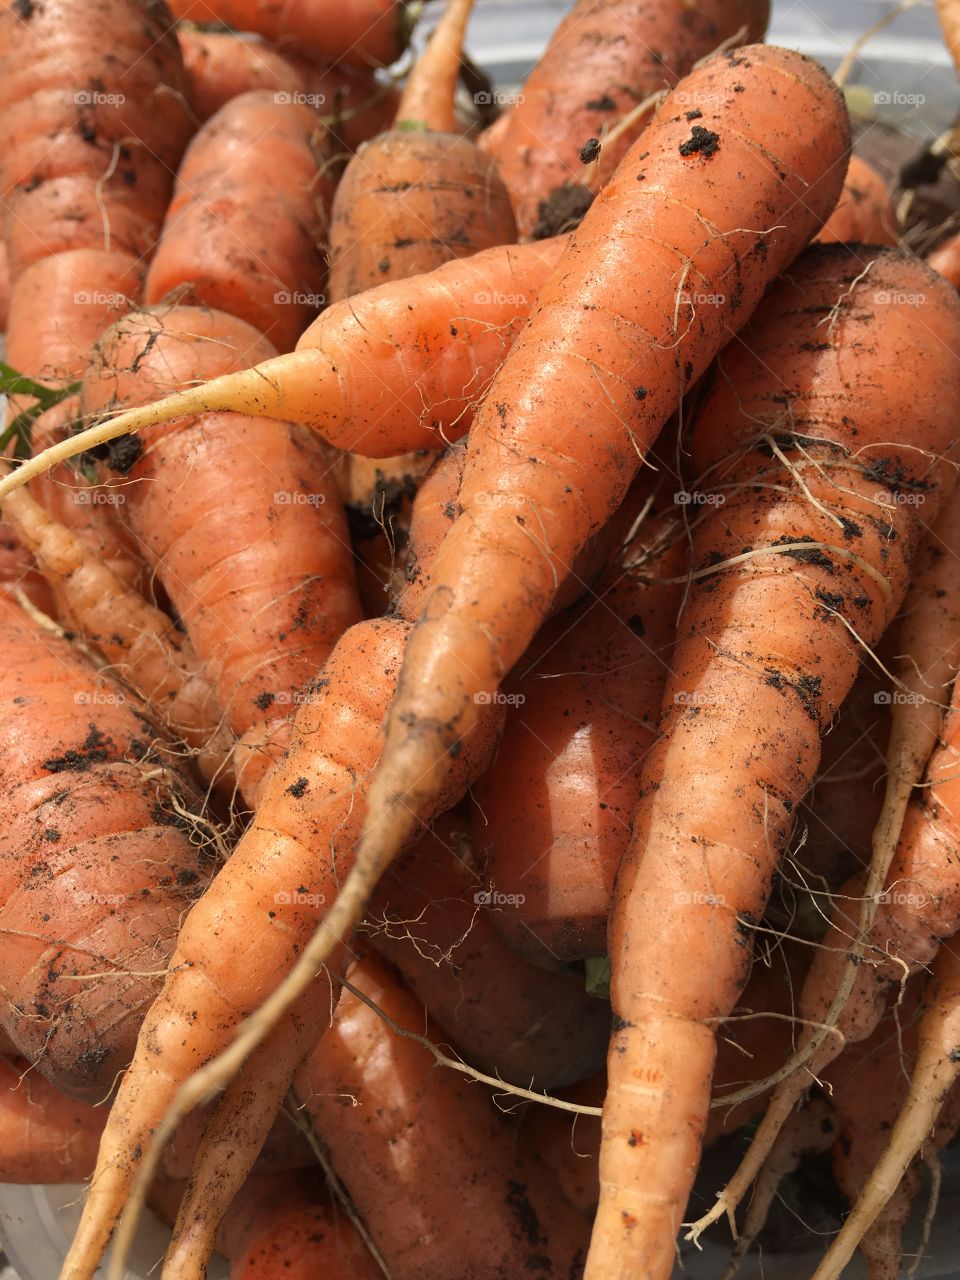 Fresh carrots 